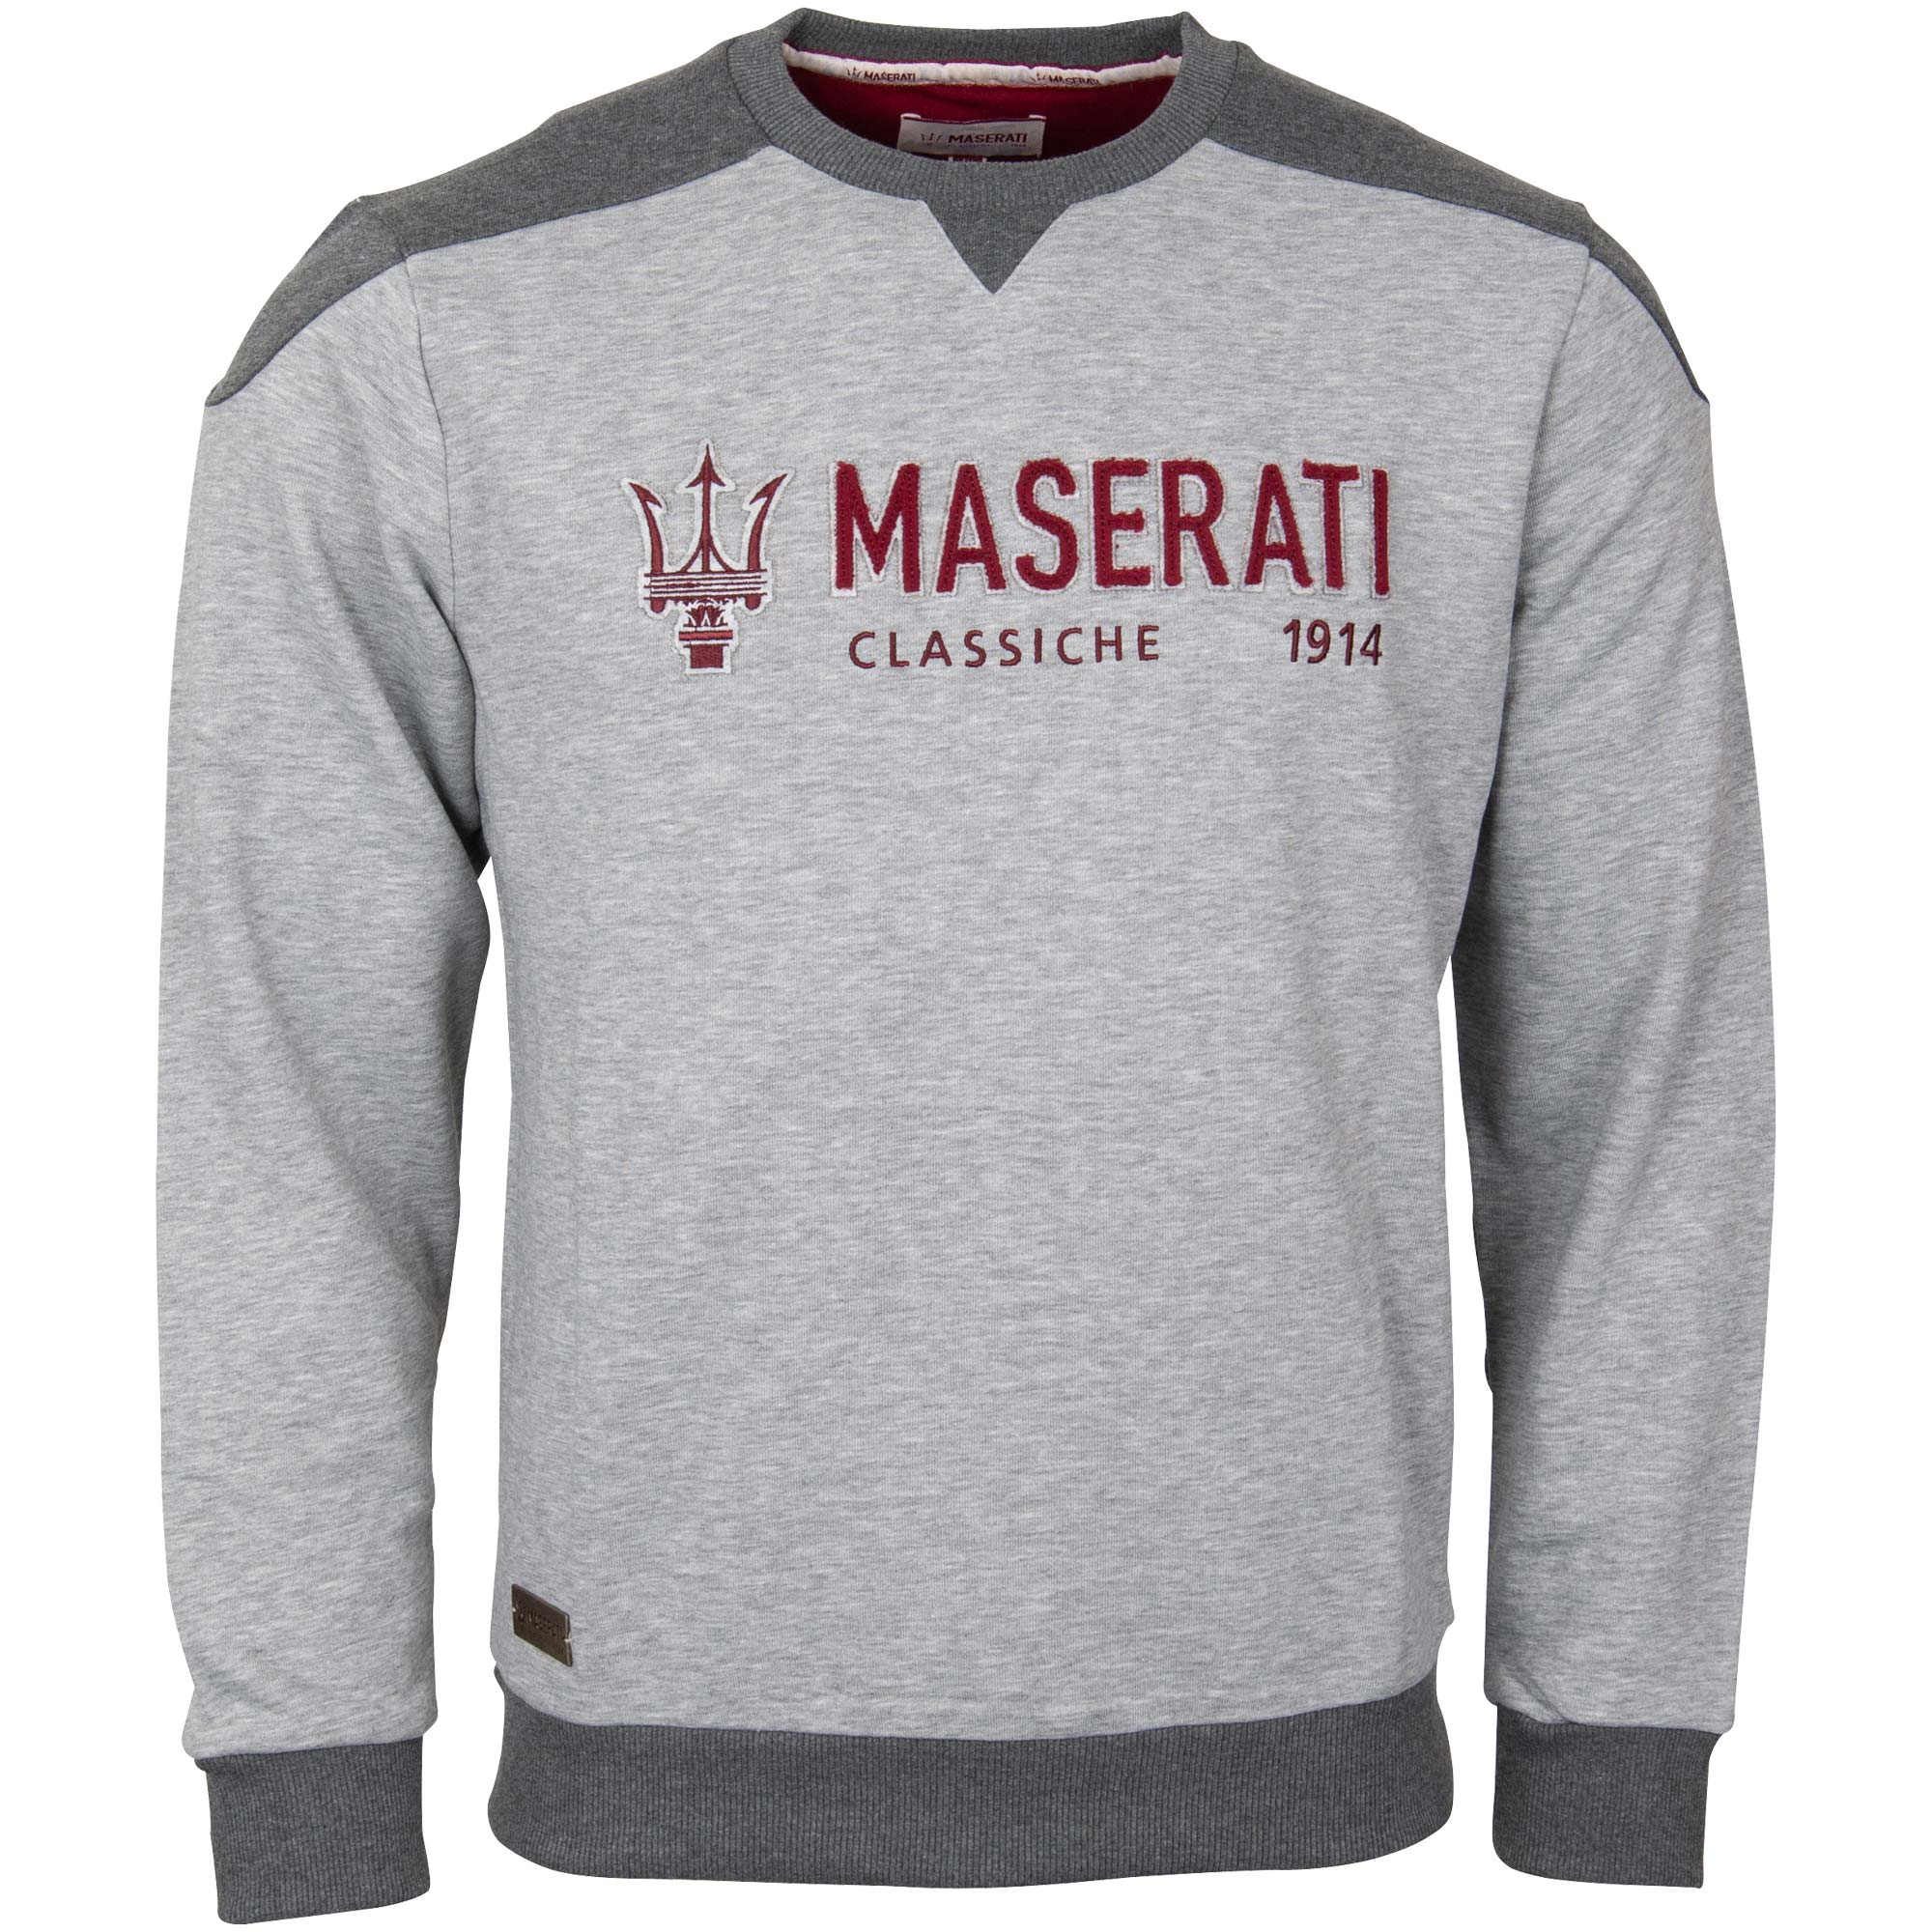 Maserati Classiche Sweatshirt "Lifestyle" - grau